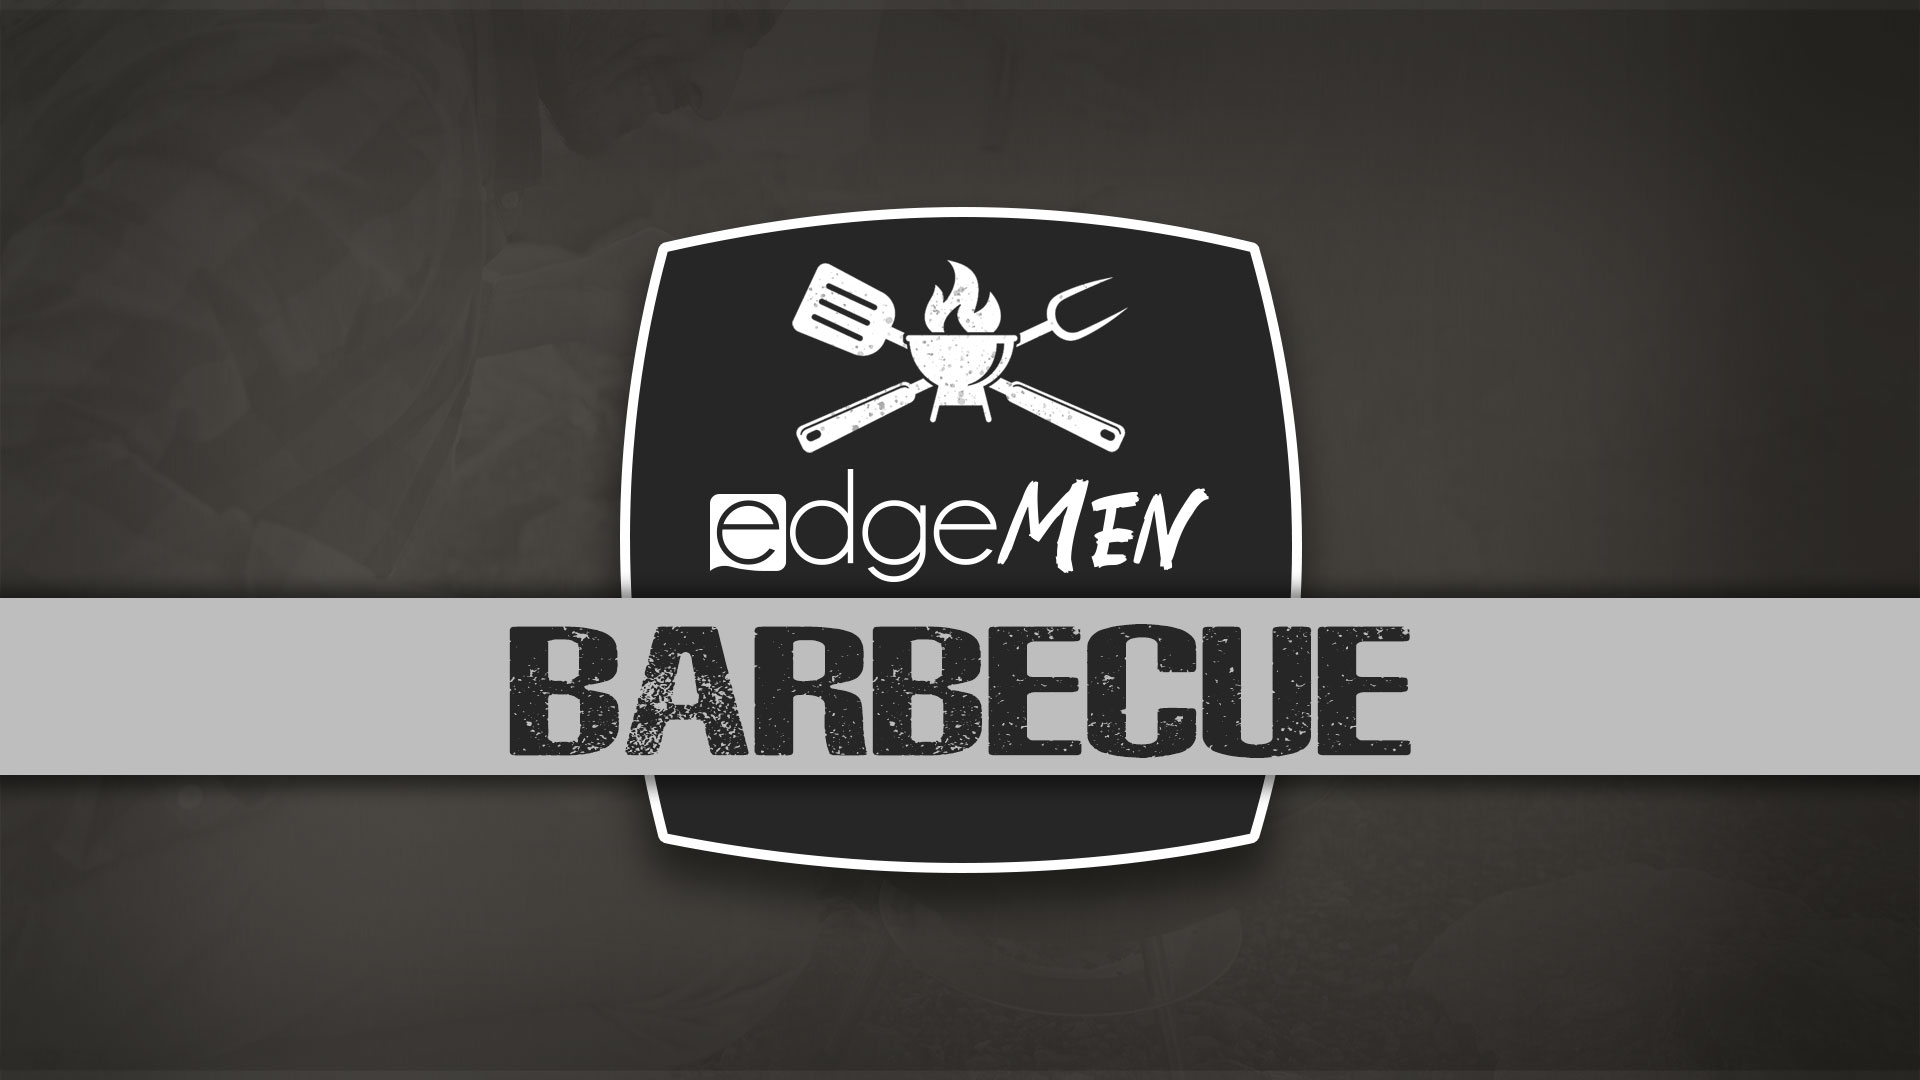 EdgeMen Barbecue August 14